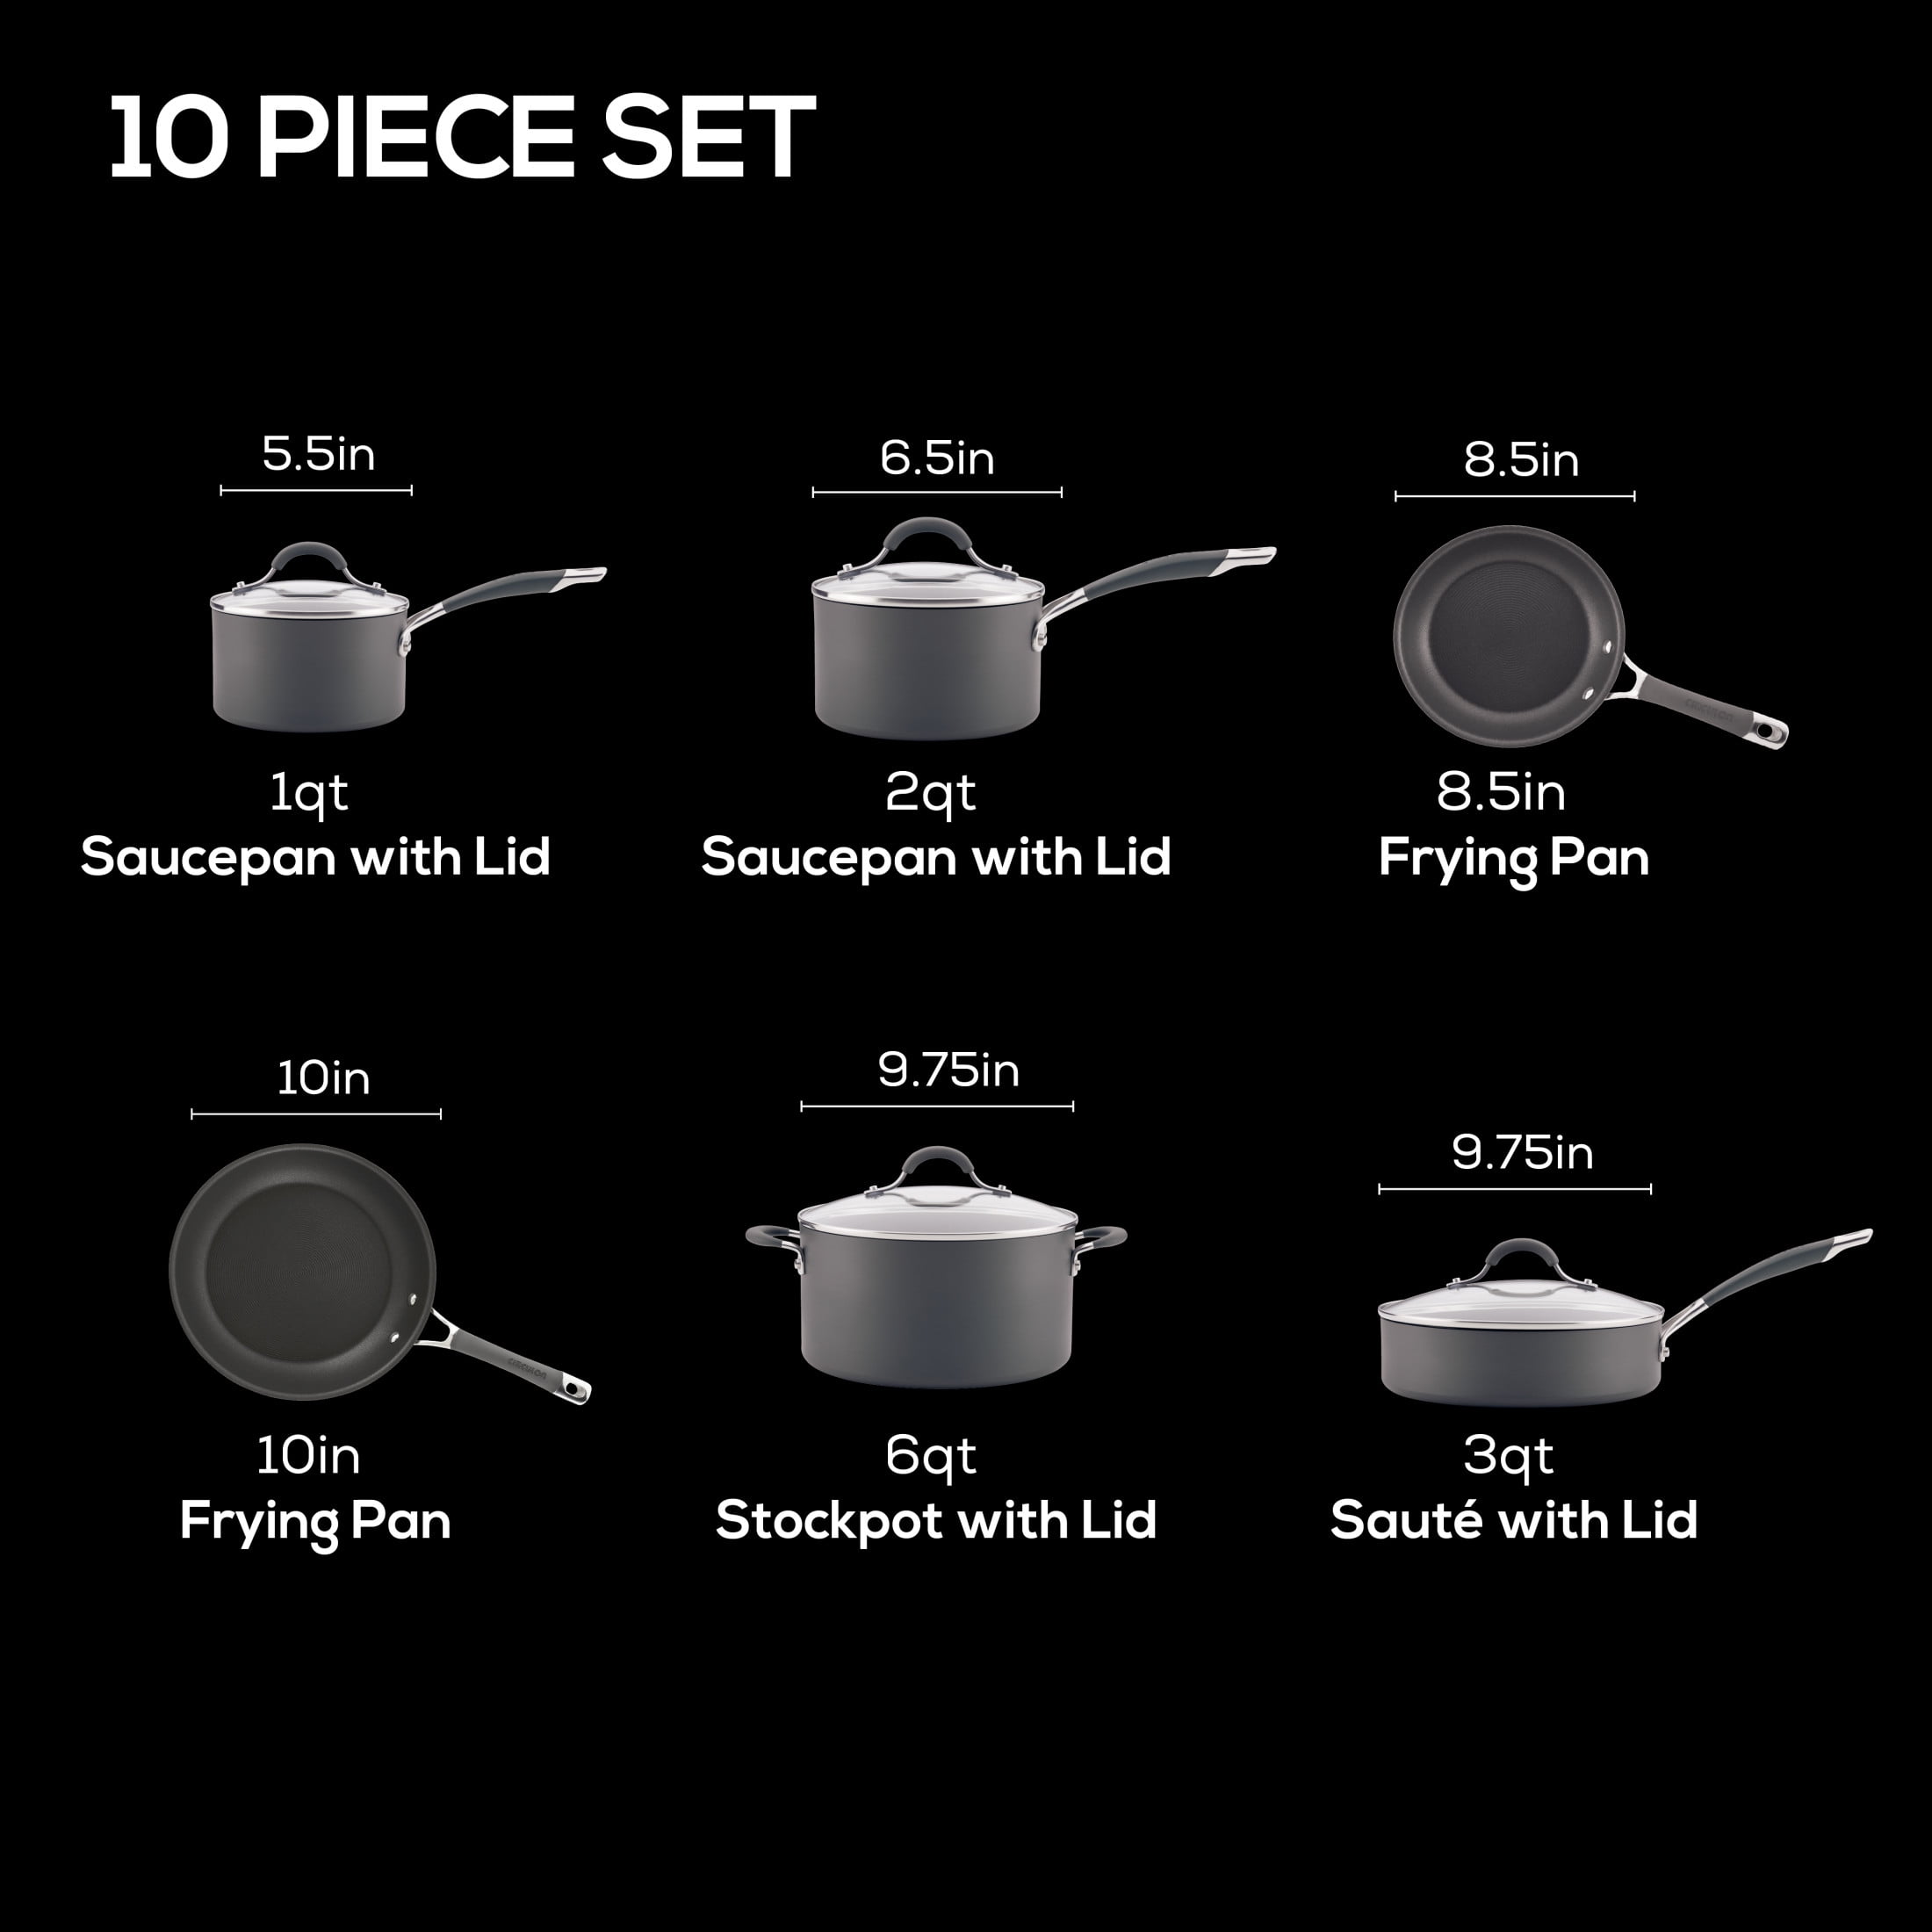 Circulon 10-piece Cookware Set with lifetime warranty at $87.50 (Reg. $150)